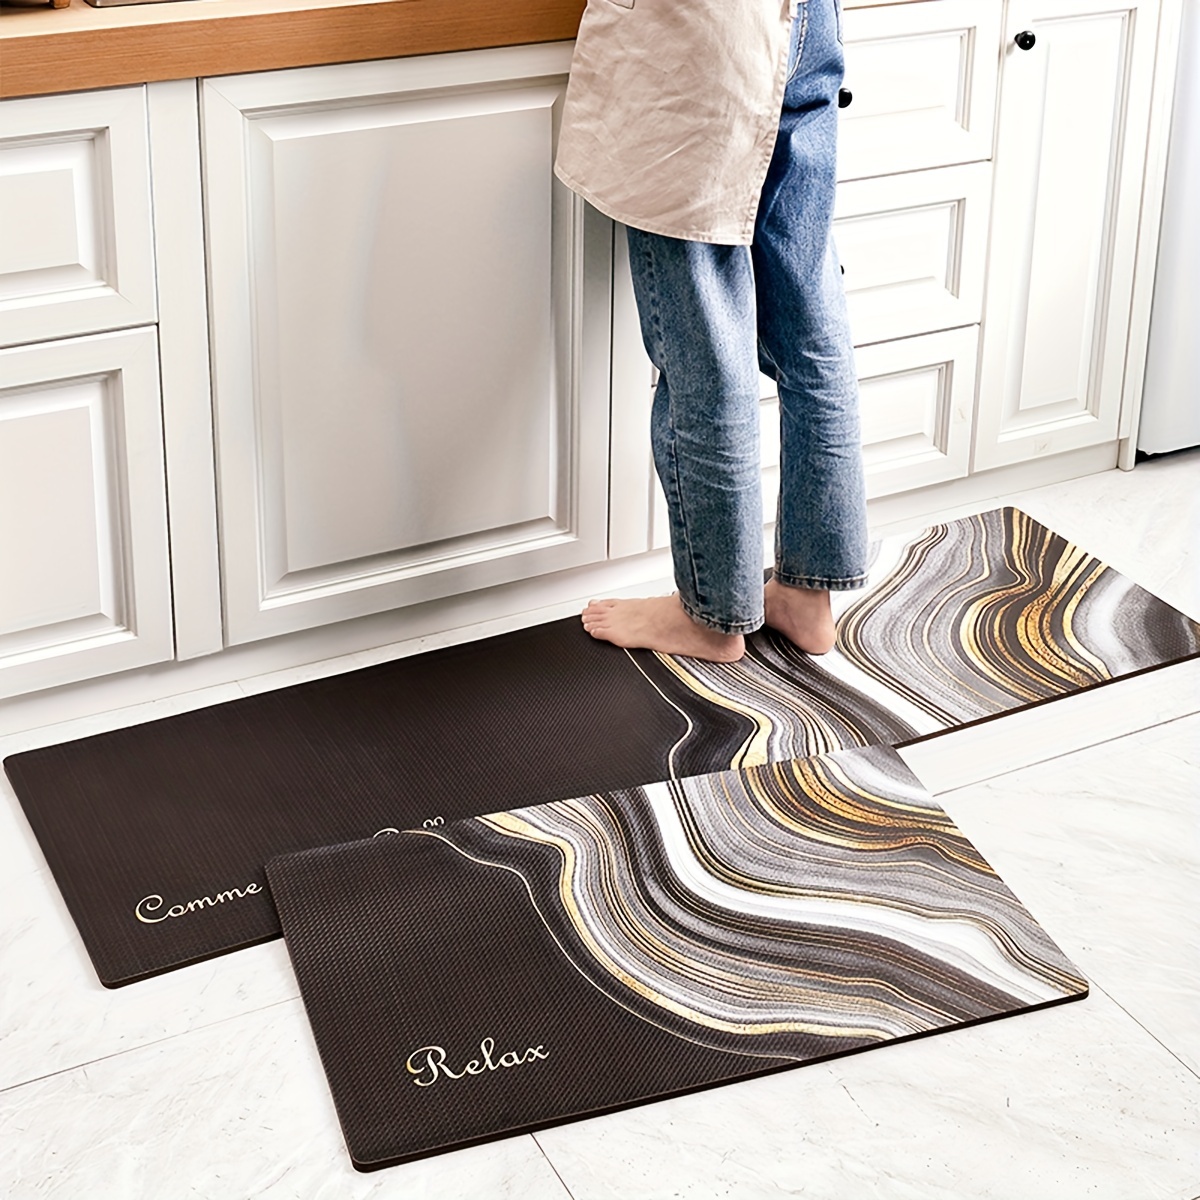 Dexi Kitchen Rugs, Cushioned Anti-fatigue Kitchen Floor Mats, Non